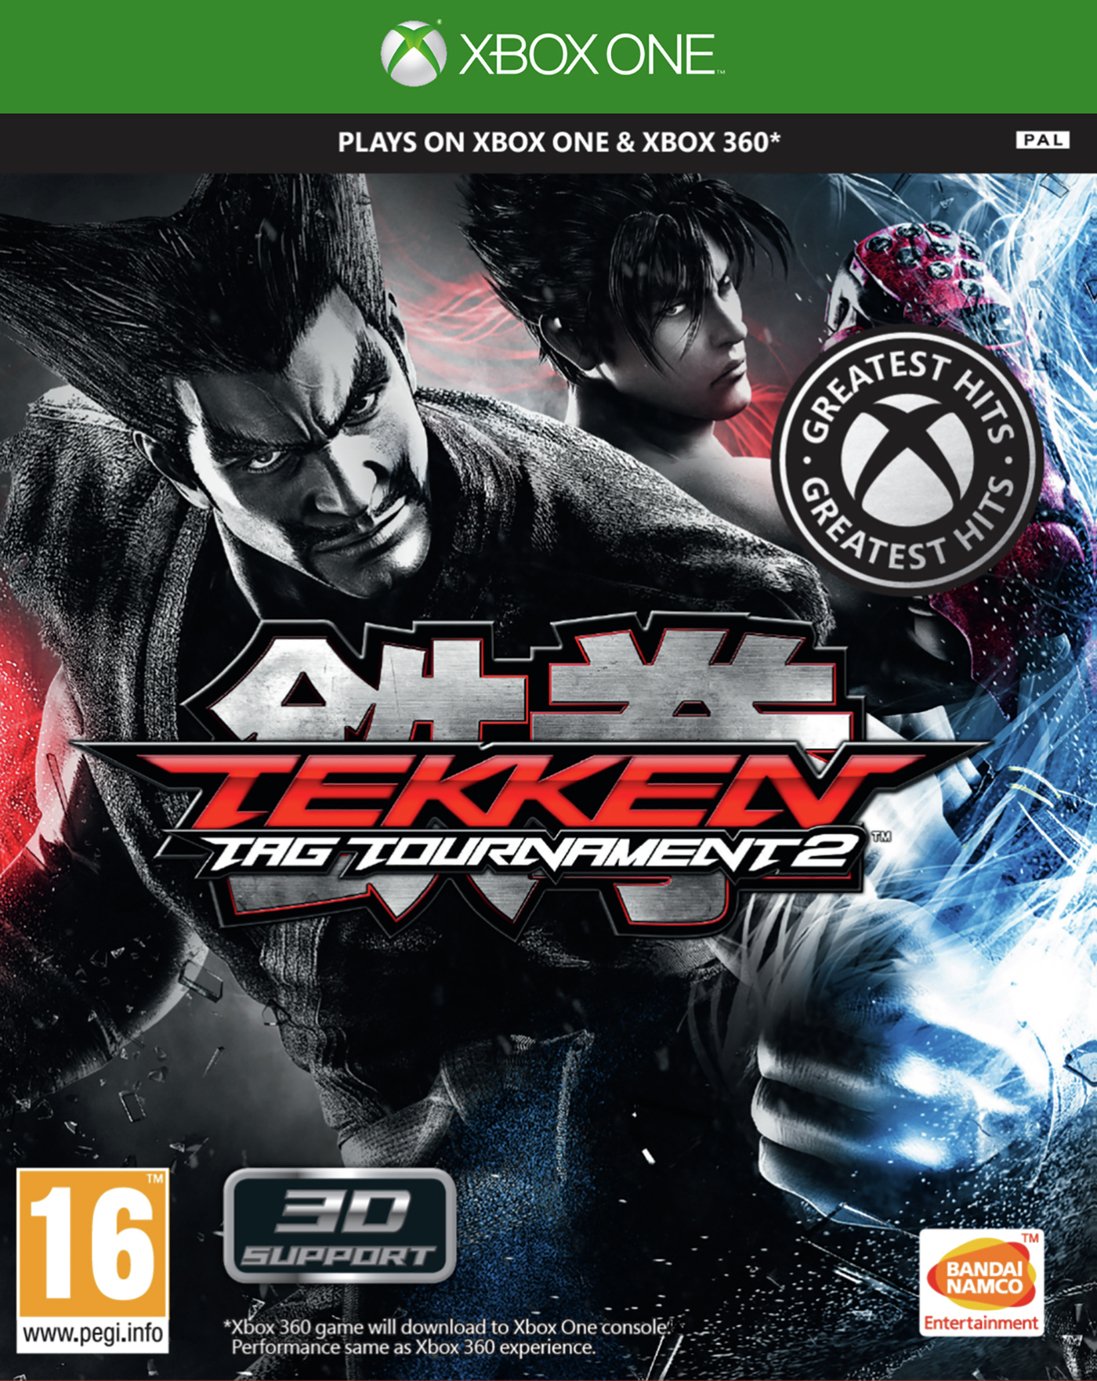 Tekken Tag Tournament 2 Xbox 360 Game review